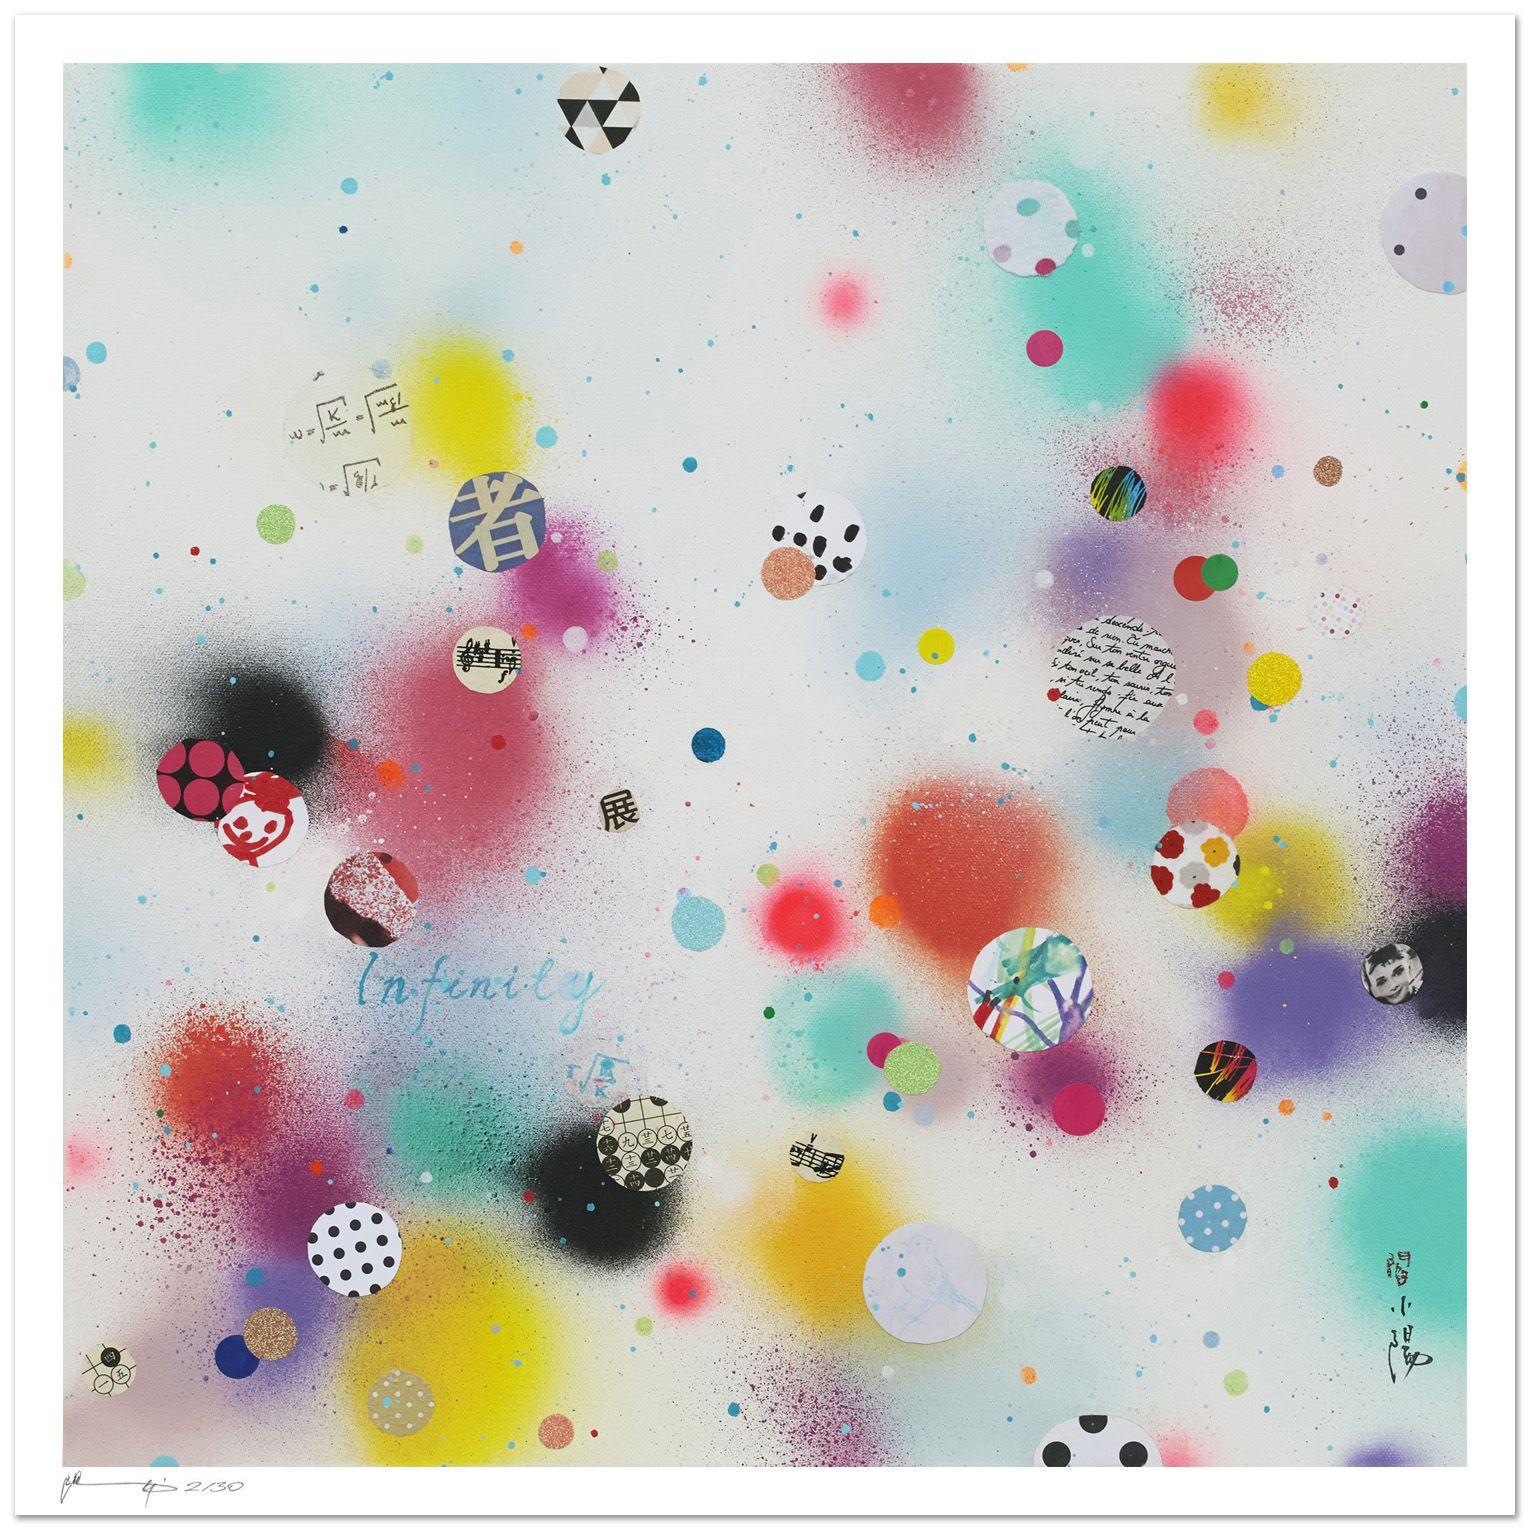 Xiaoyang Galas Abstract Print - Infinity - Fine art giclÃce print, Digital on Paper